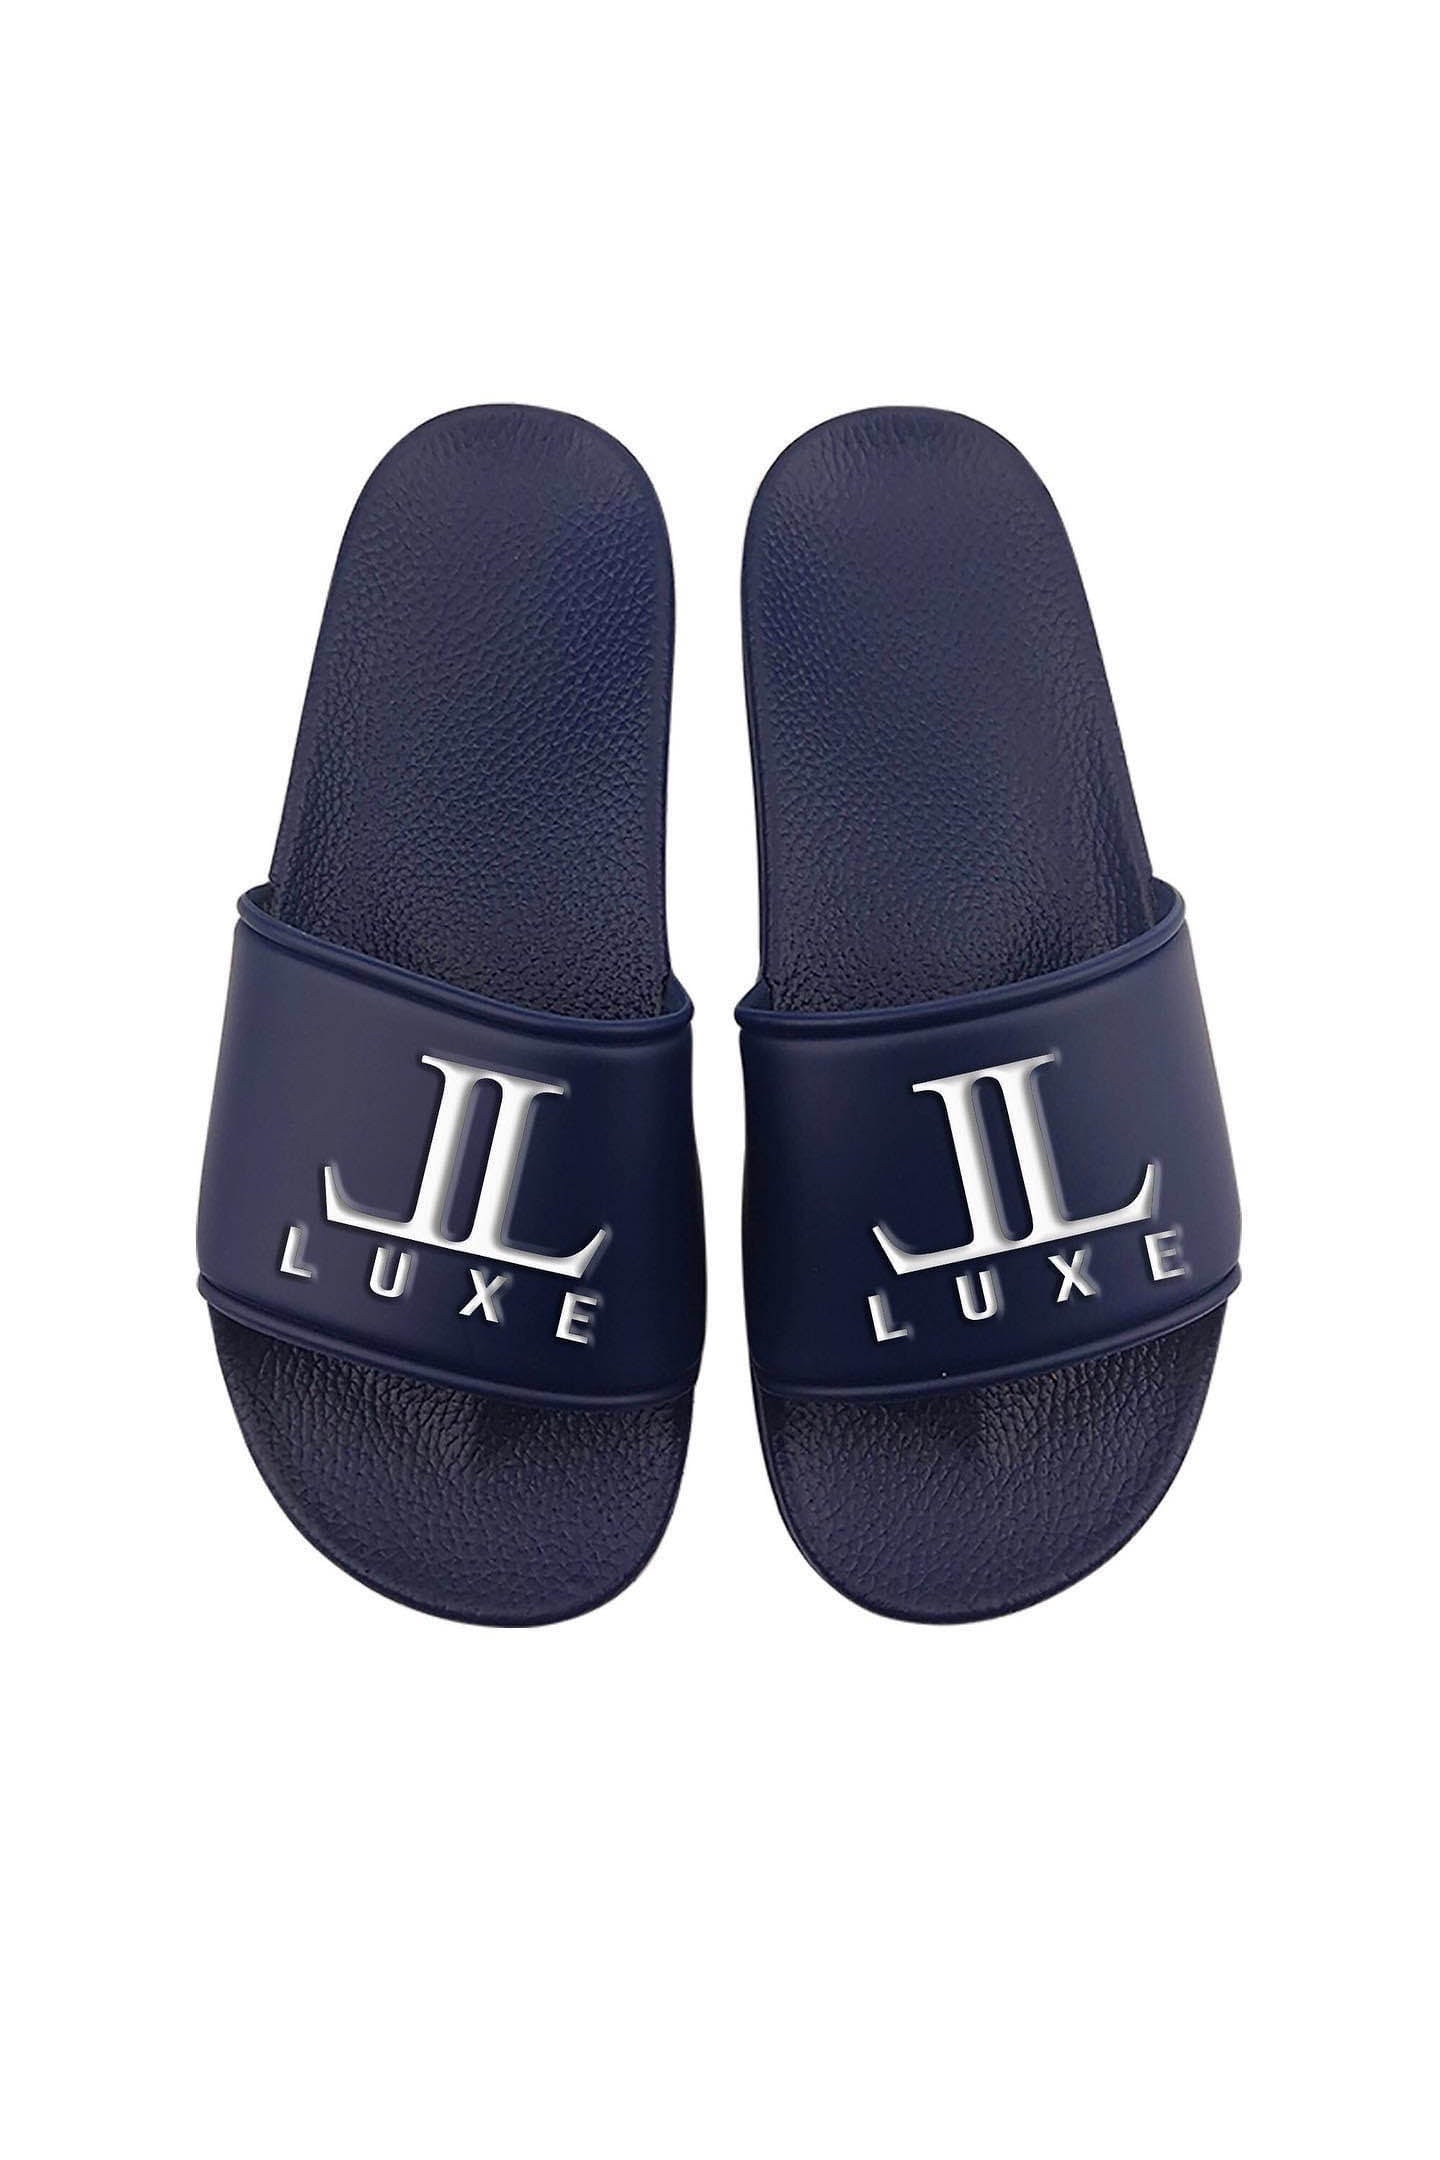 Louis Vuitton SLide Grey Blue